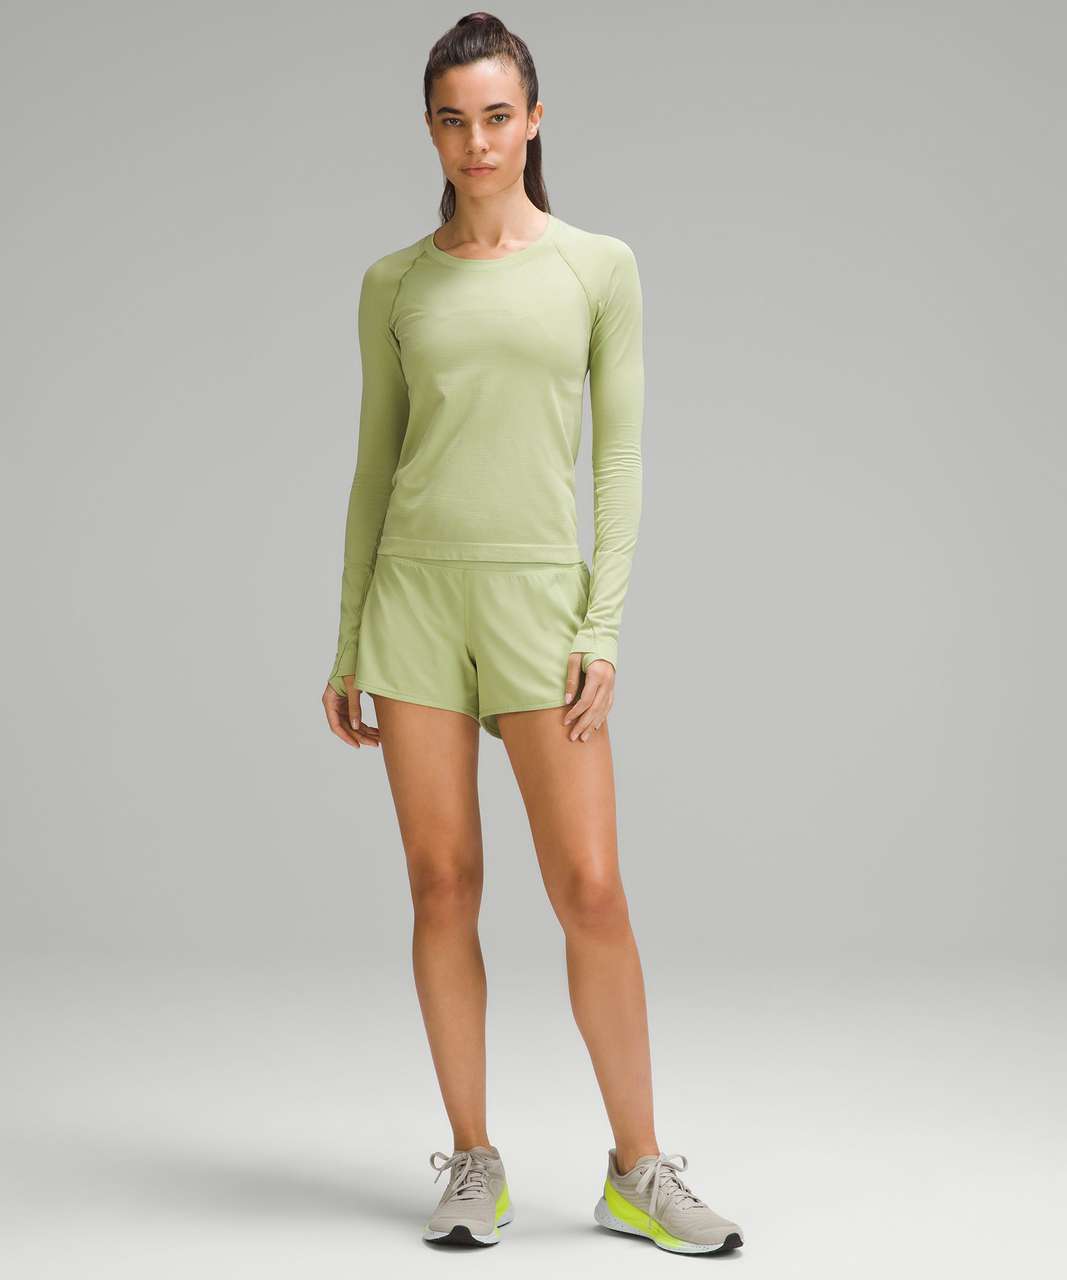 Lululemon Swiftly Tech Long-Sleeve Shirt 2.0 *Race Length - Edamame Green / Edamame Green